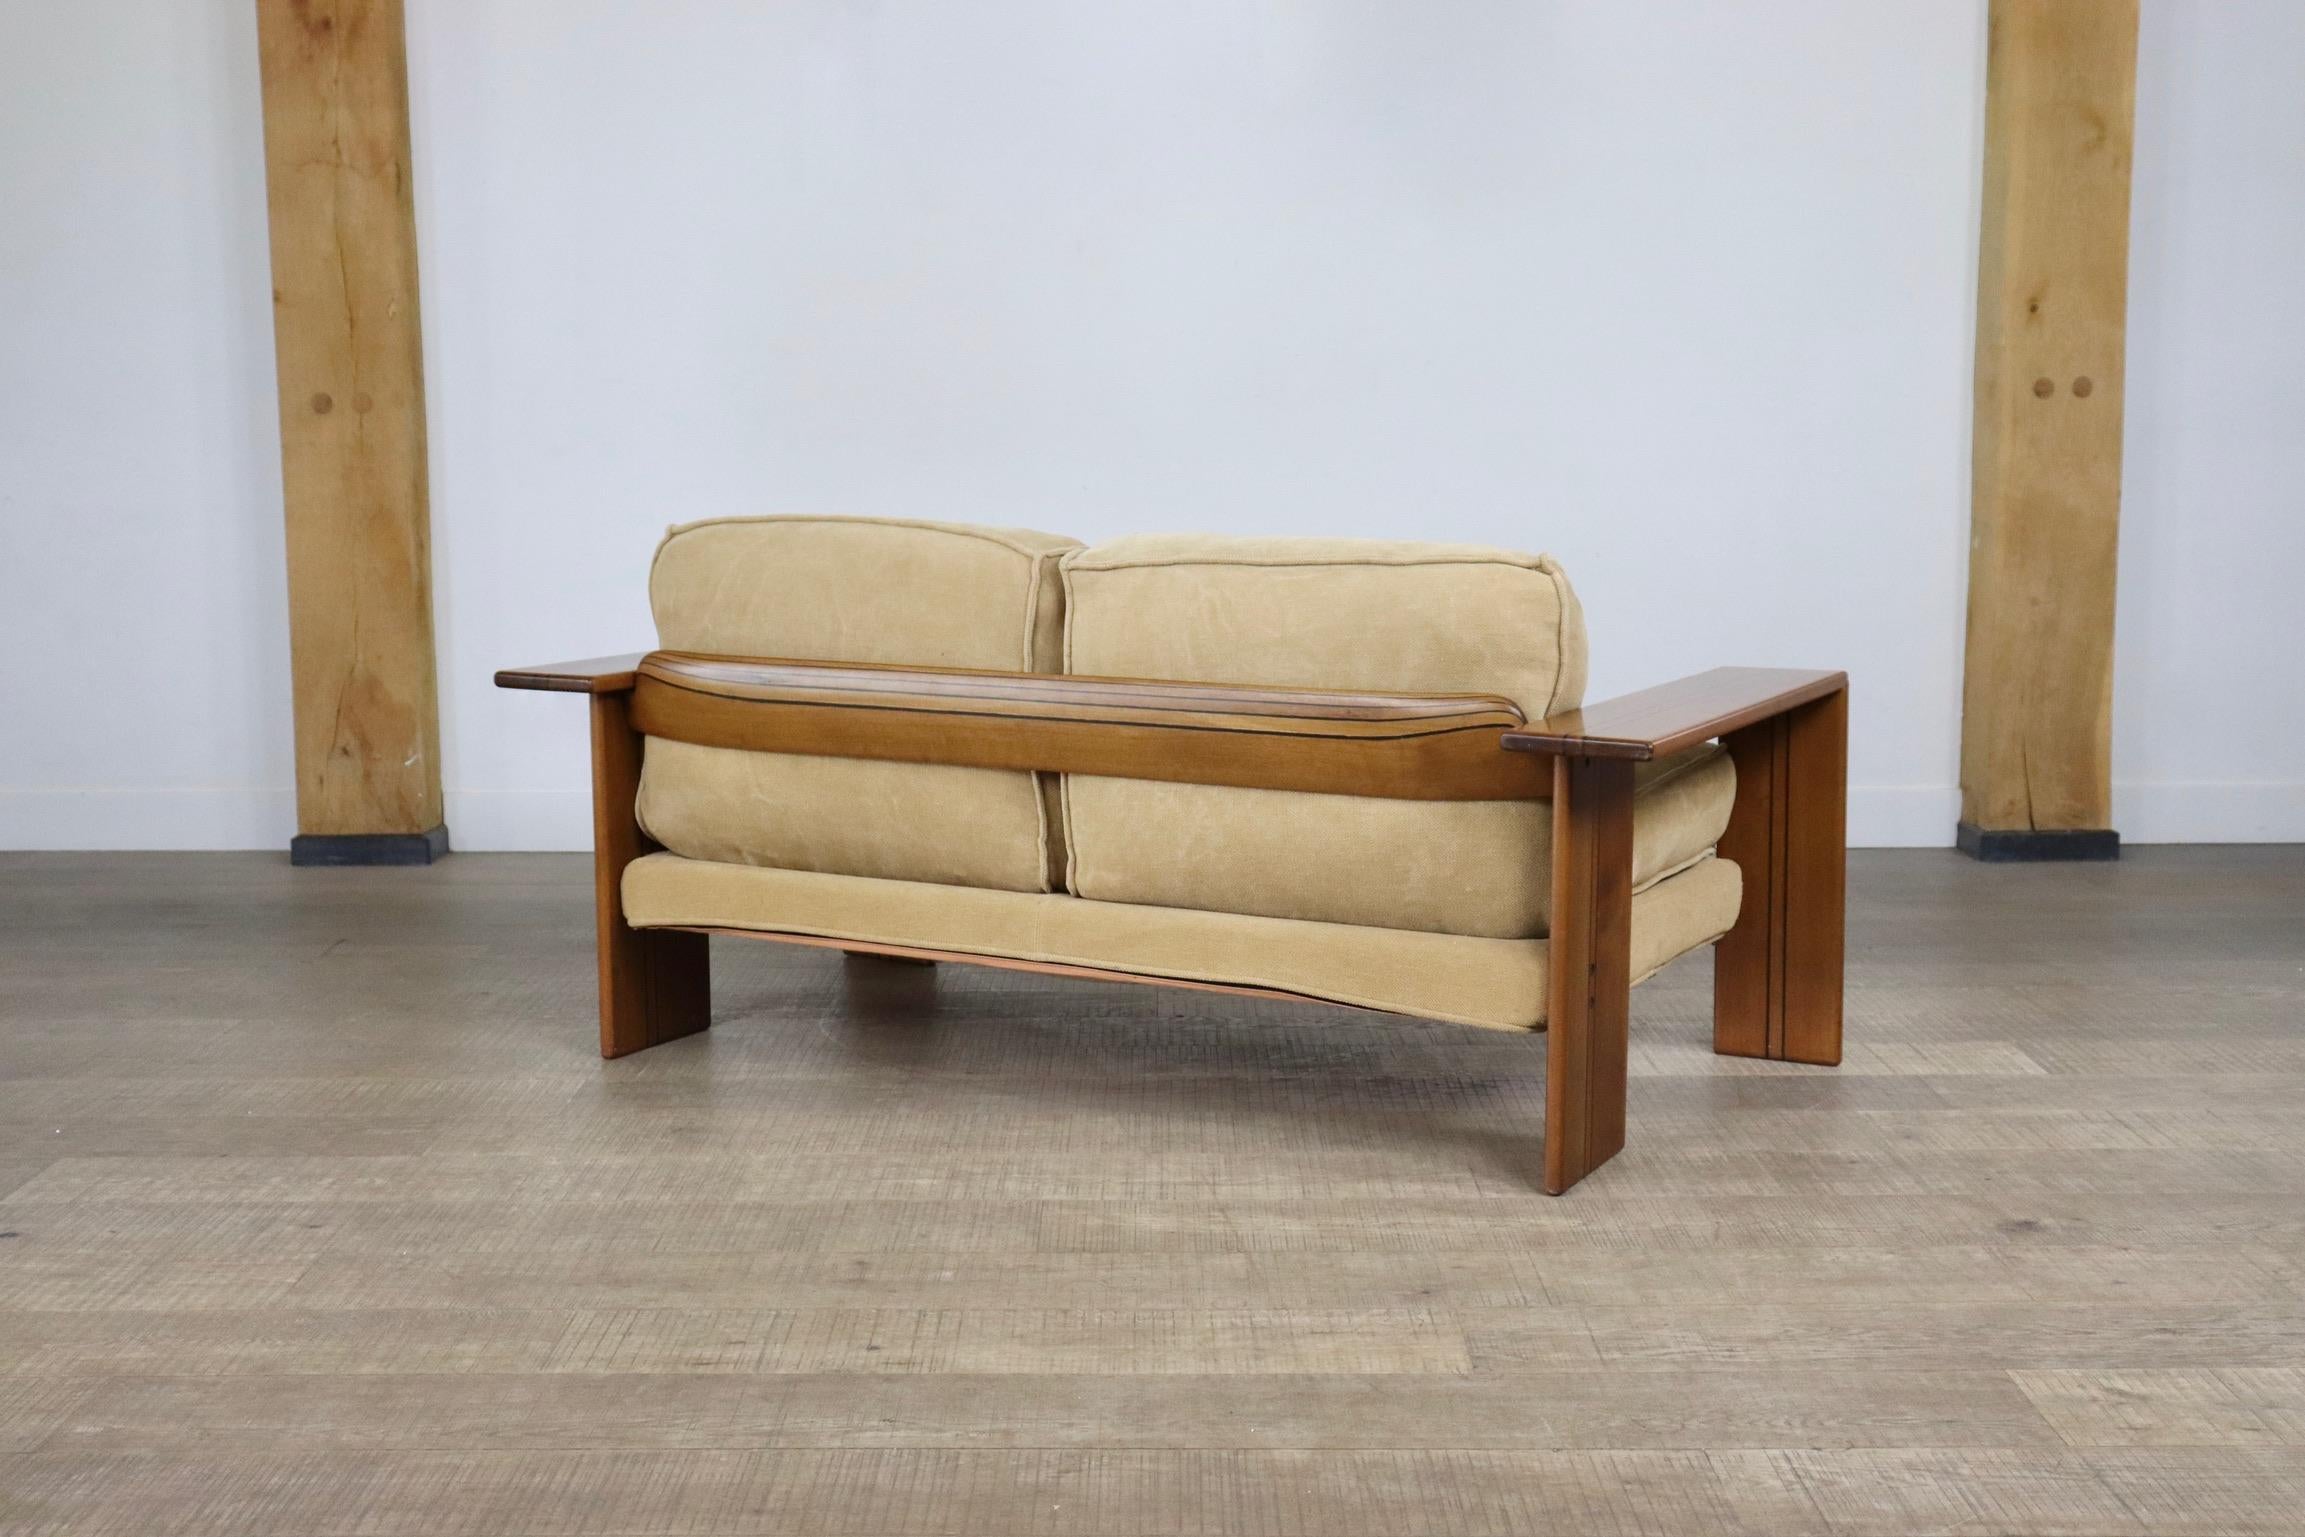 Afra & Tobia Scarpa ‘Artona’ Sofa in Elm and linen for Maxalto, 1975 For Sale 4